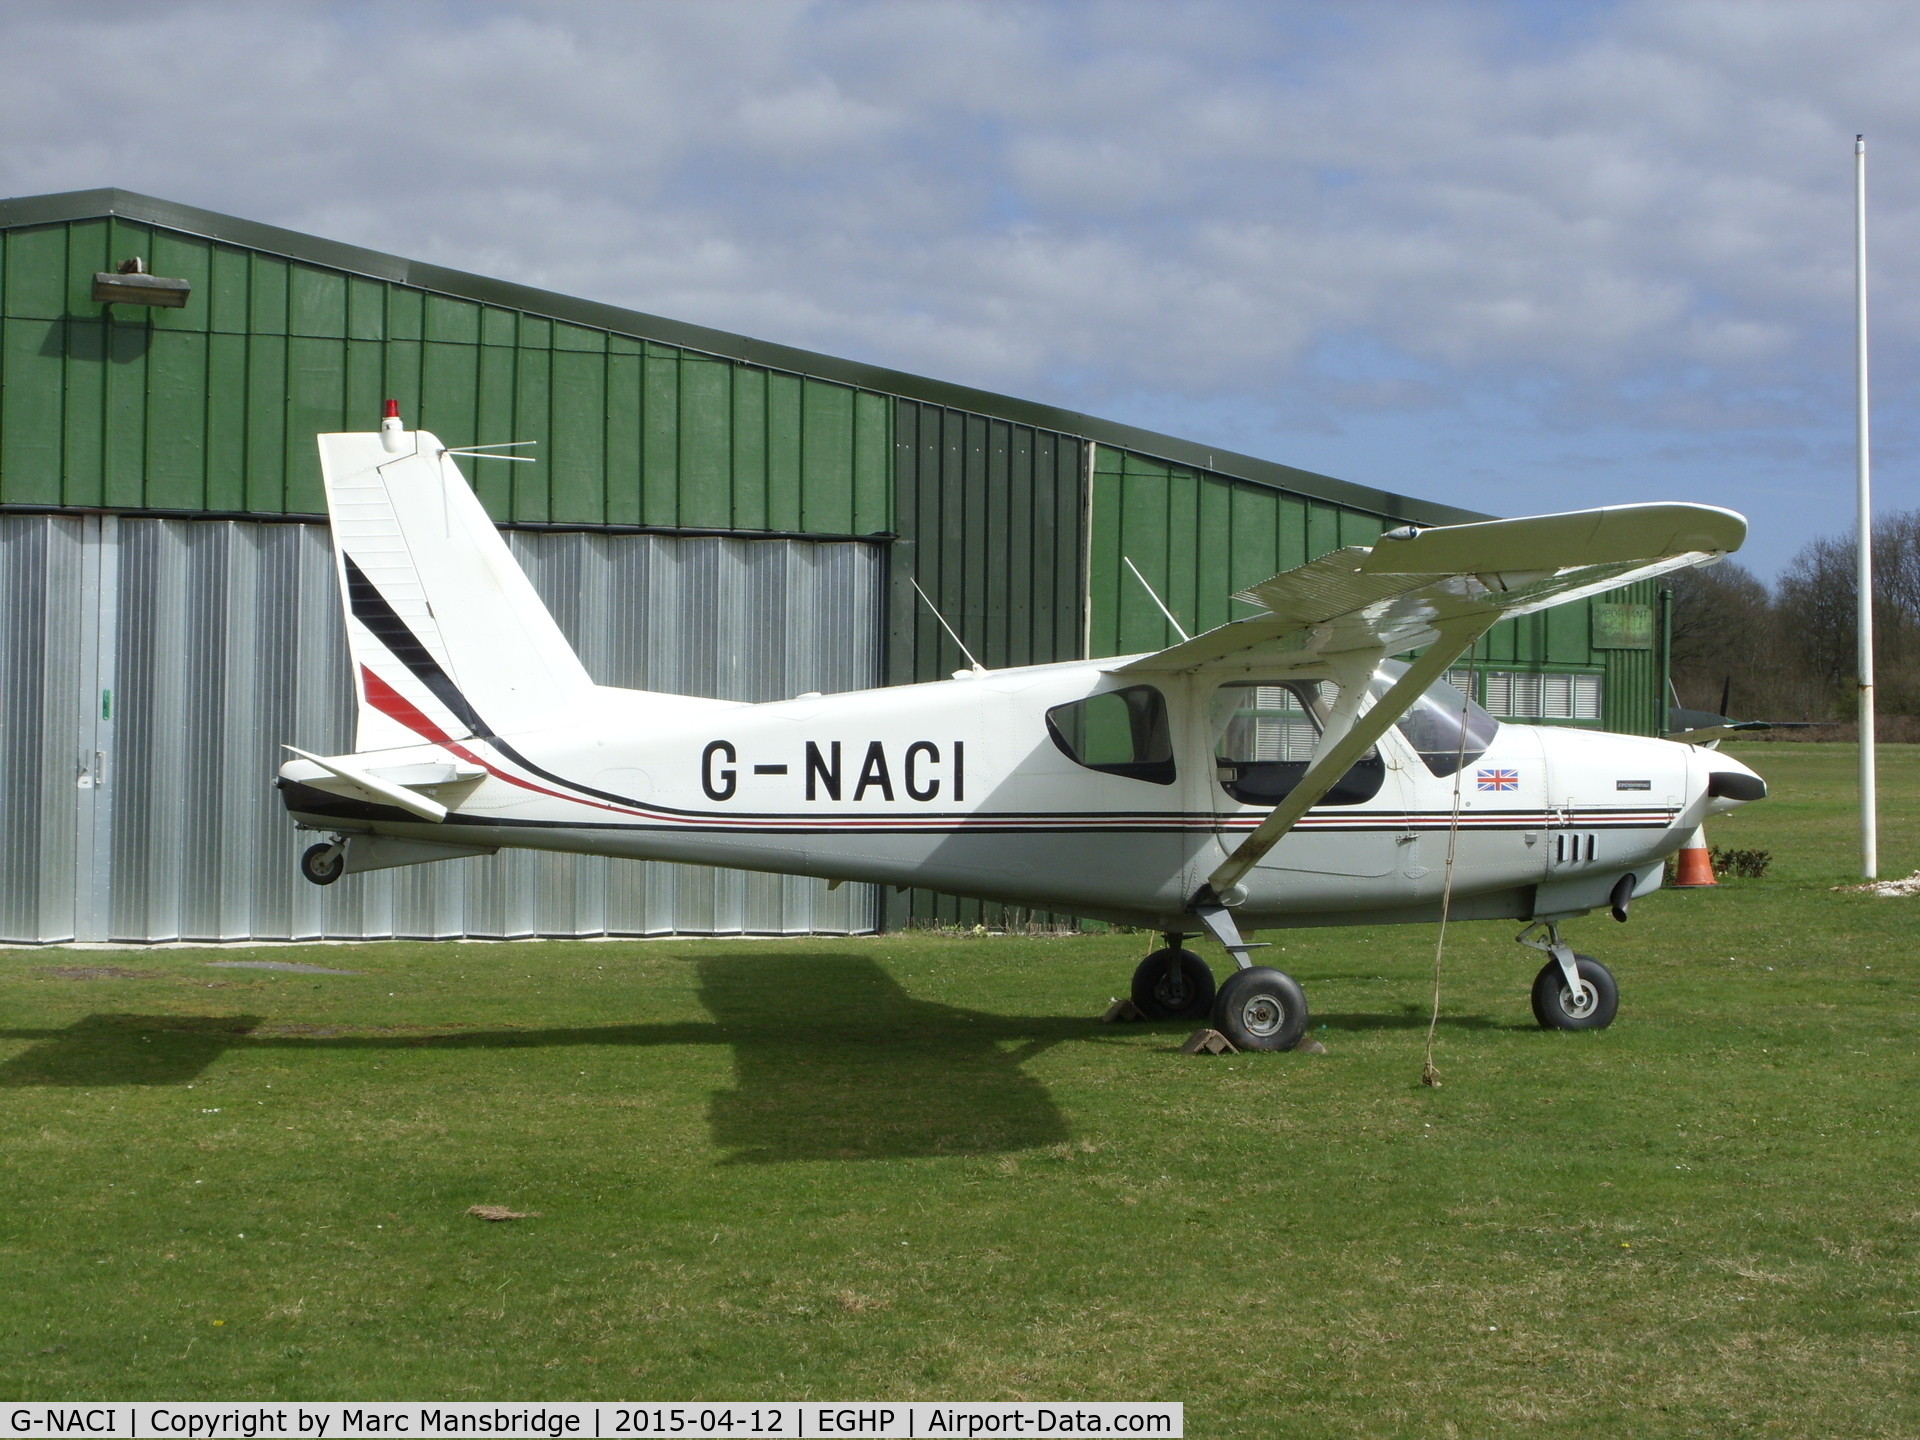 G-NACI, 1984 Norman NAC-1 Series 180 Freelance C/N NAC 001, Parked at Popham airfield EGHP, a welcome visitor.